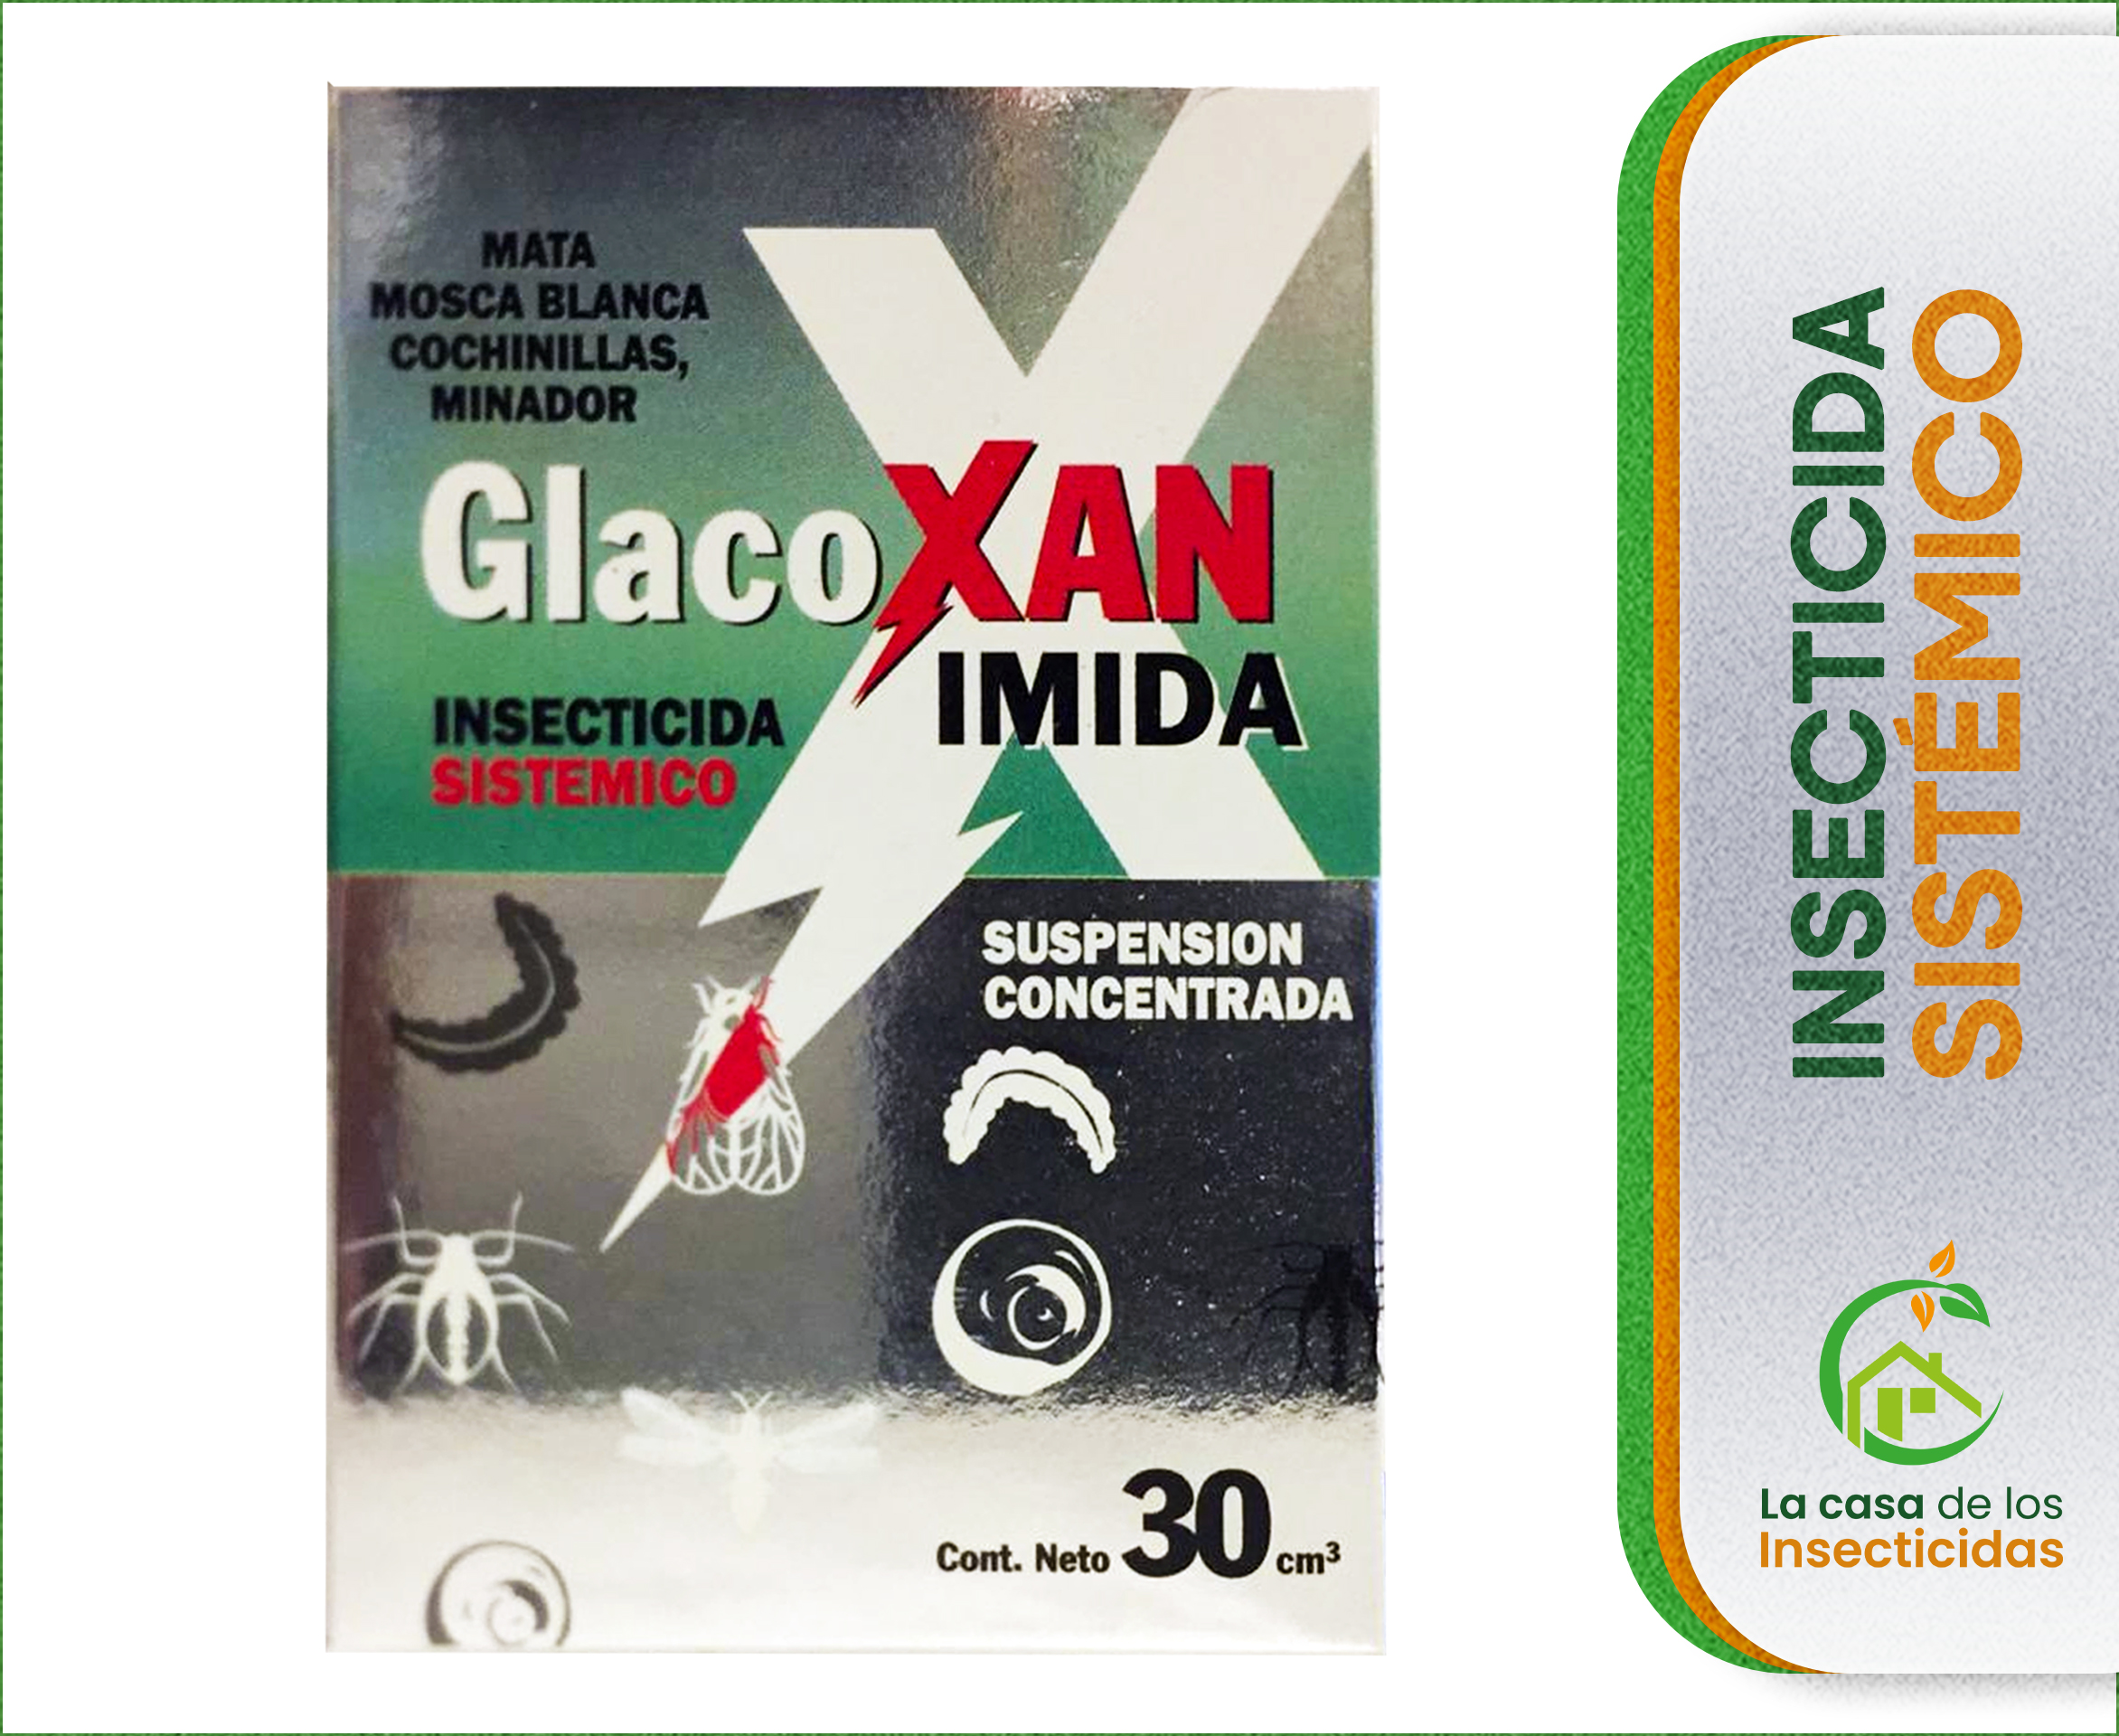 Glacoxan Imida Insecticida sistémico.